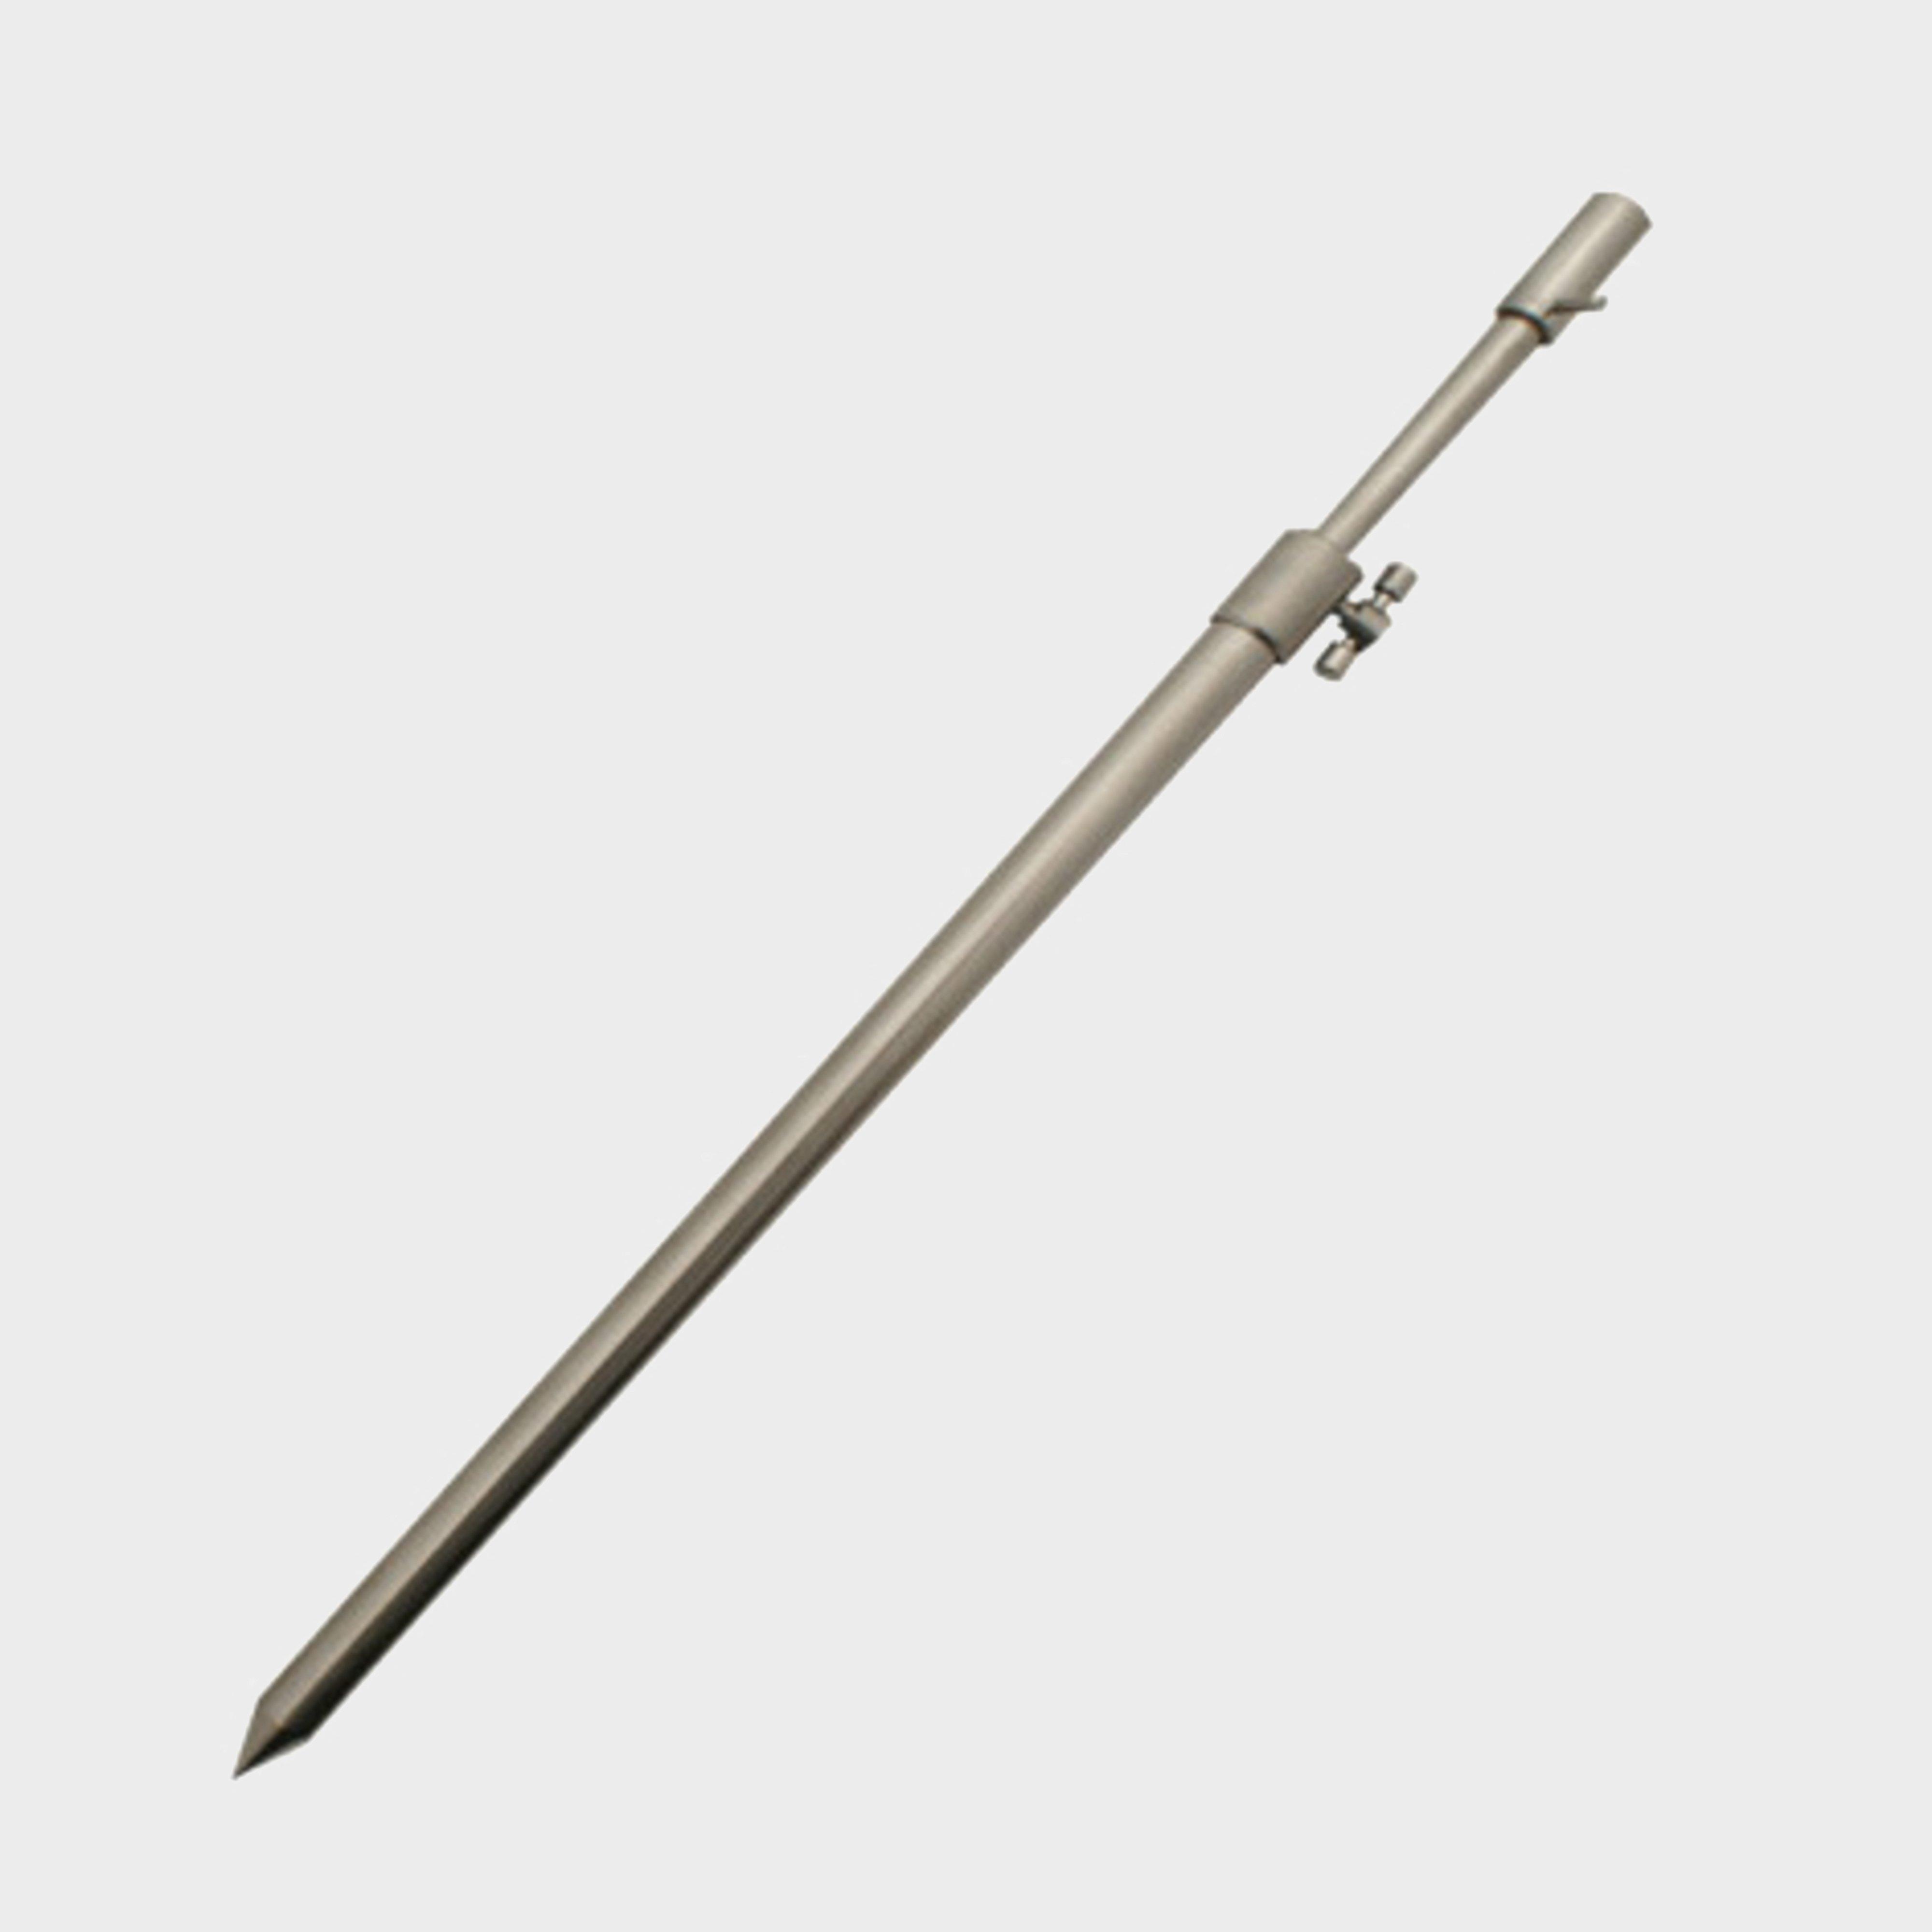 Ngt Stainless Steel Bankstick (large: 50cm - 90cm) - Stick/stick  Stick/stick